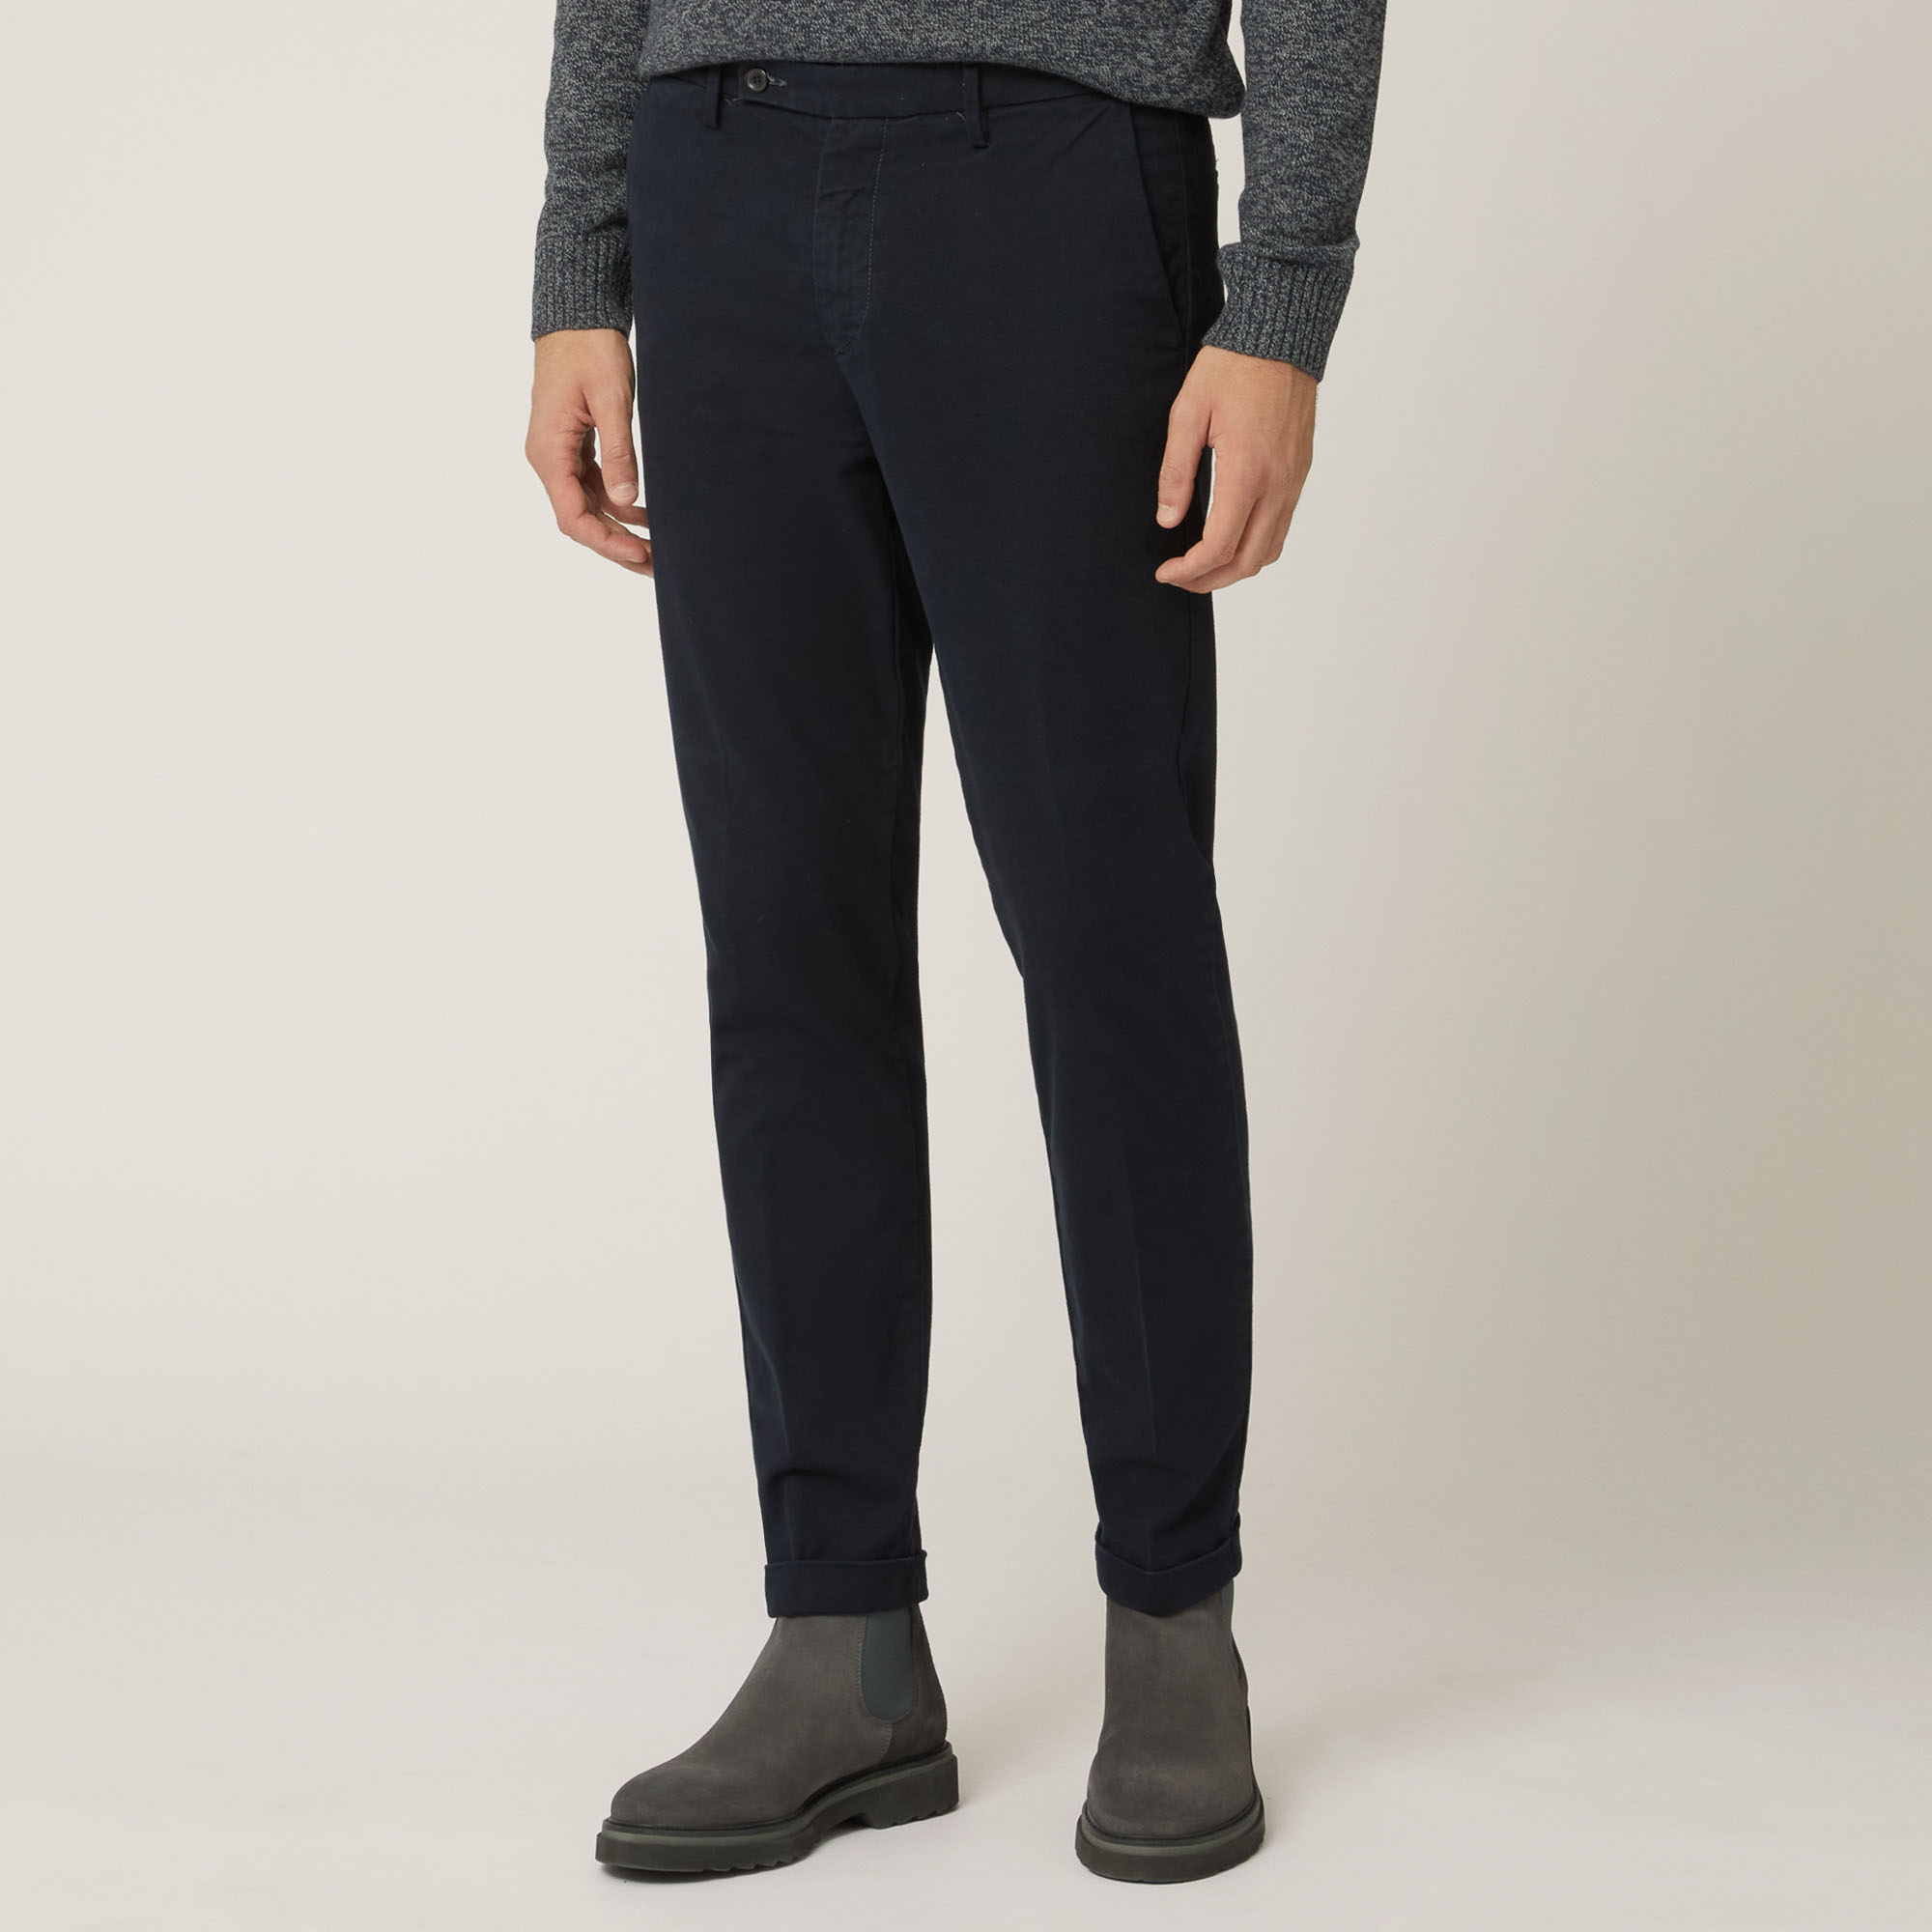 Pantalone In Cotone Stretch, Blu Navy, large